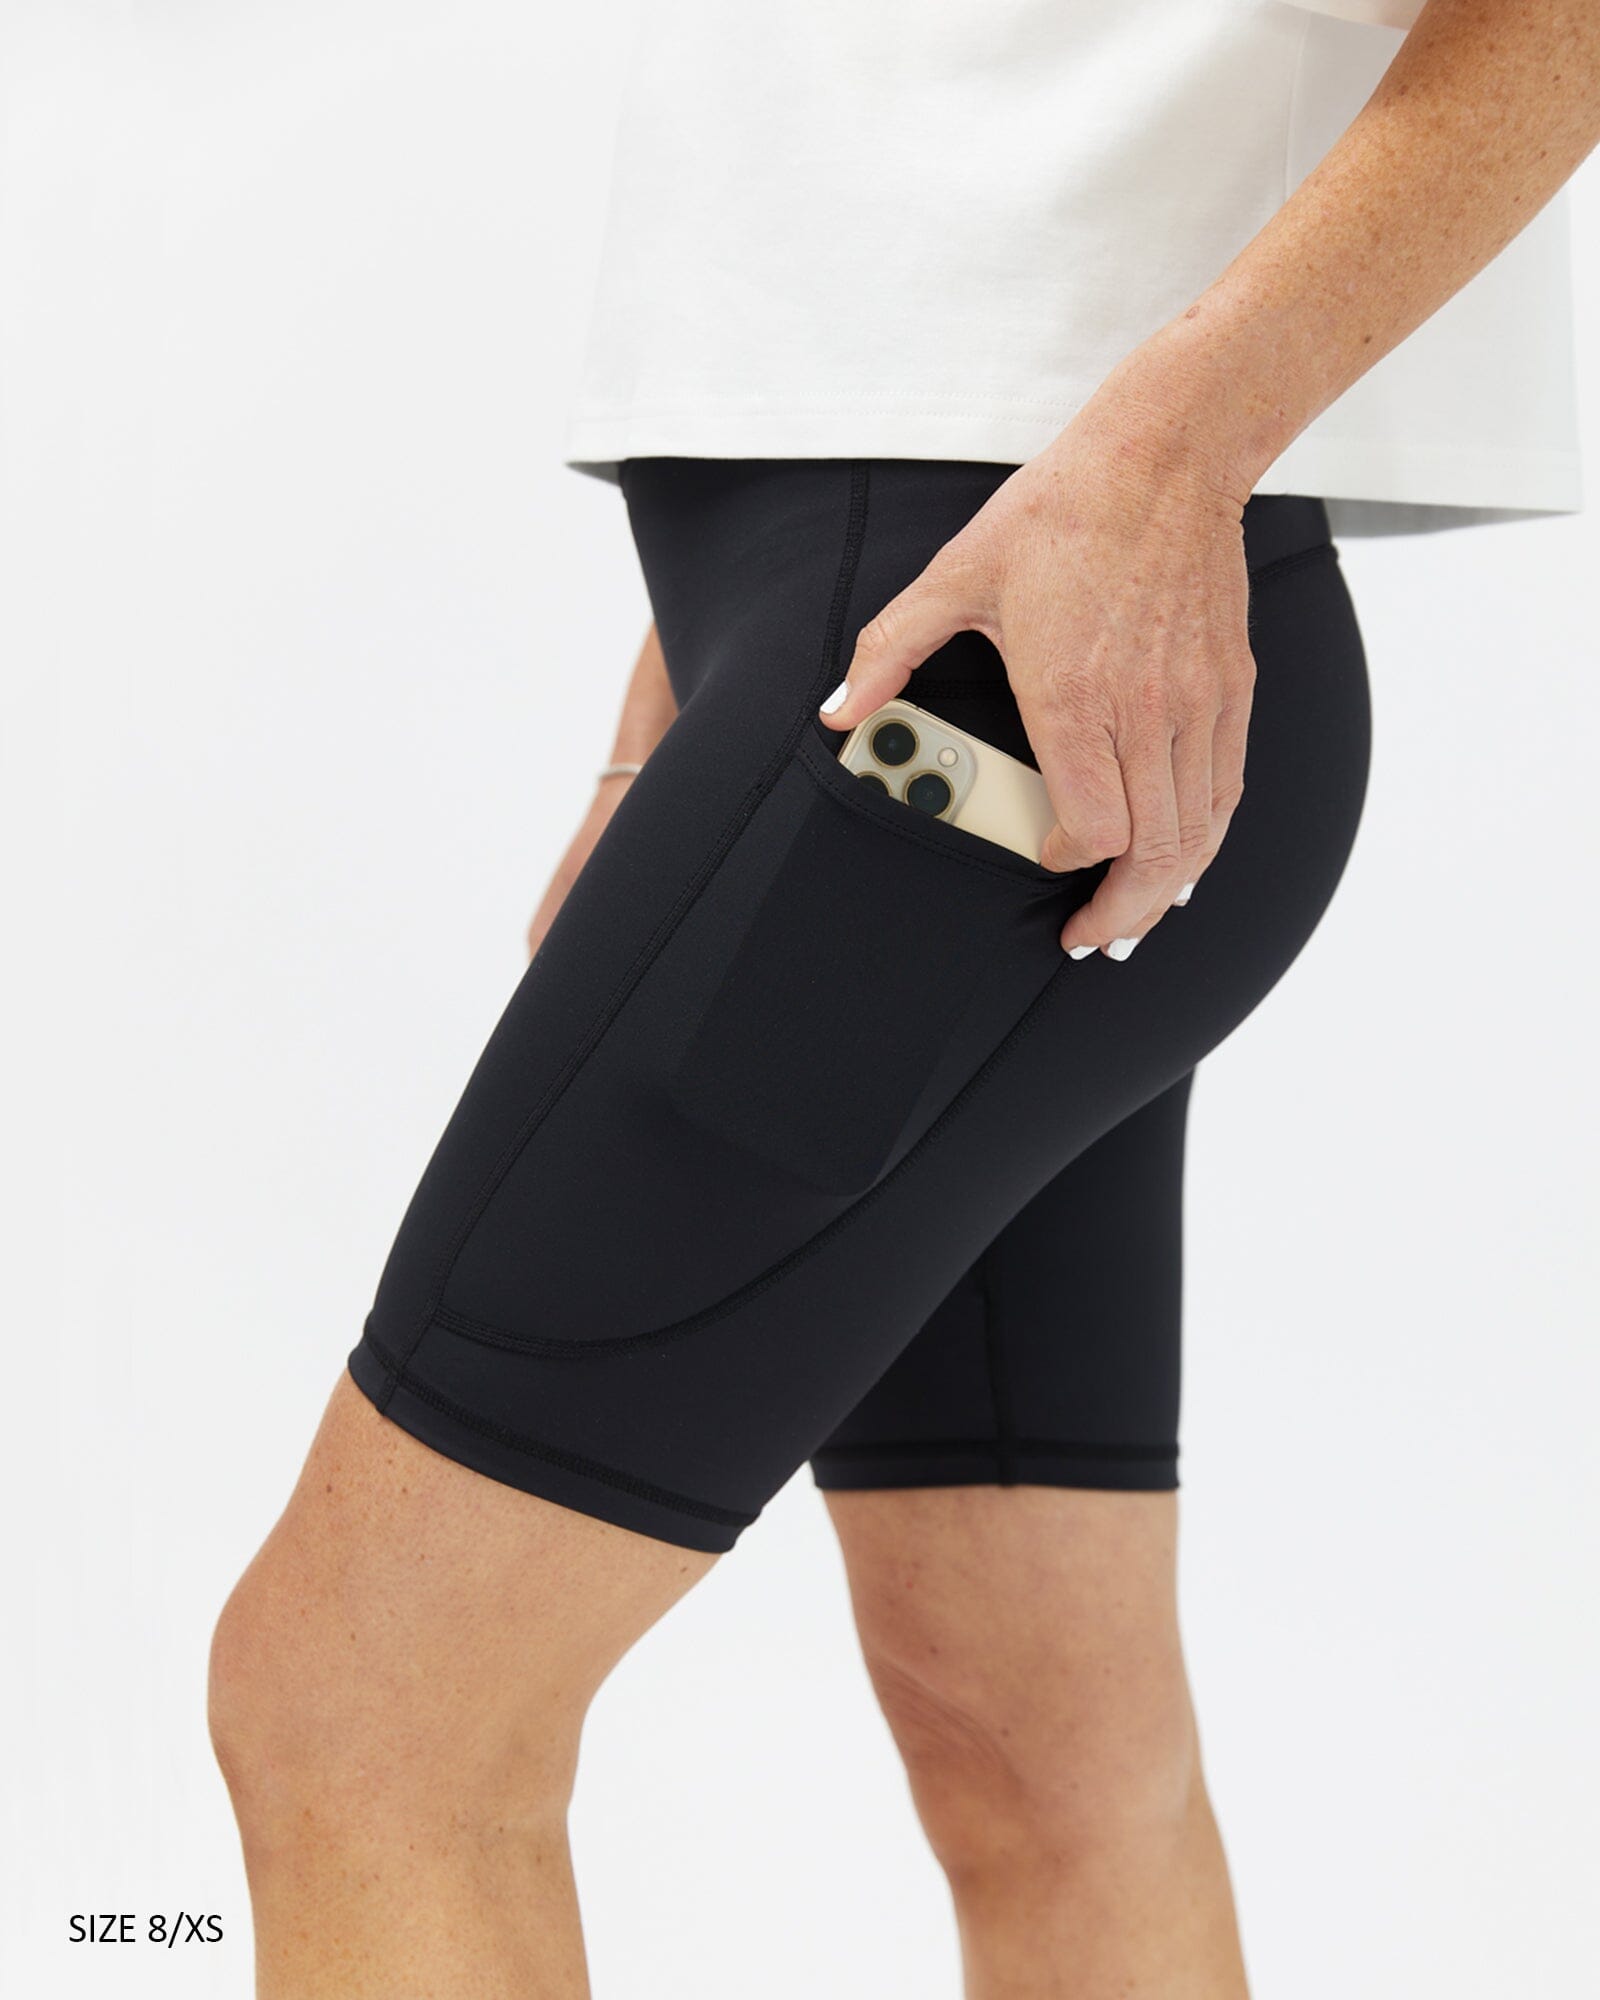 Active living bike shorts - 3 pocket - Black Leggings Avila the label 8/XS 